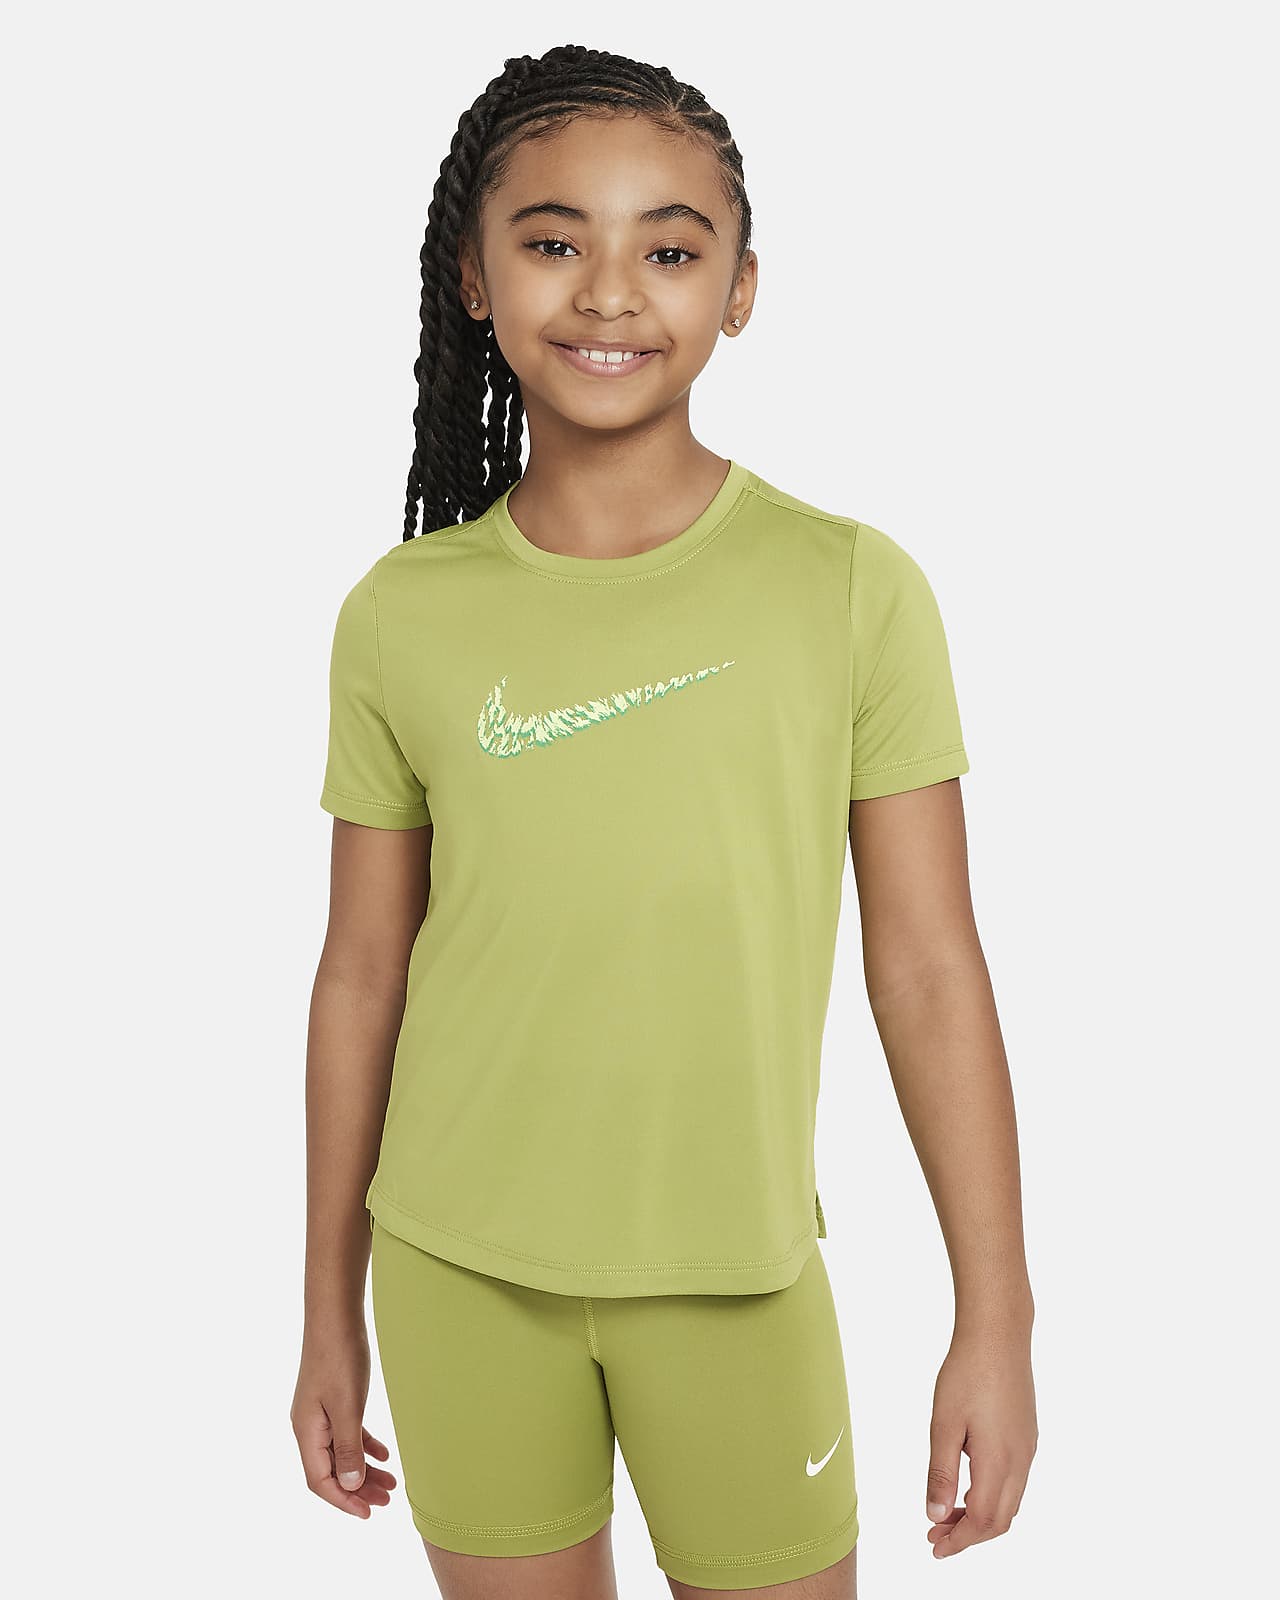 Nike One Kids\' Big (Girls\') Short-Sleeve Top. Training